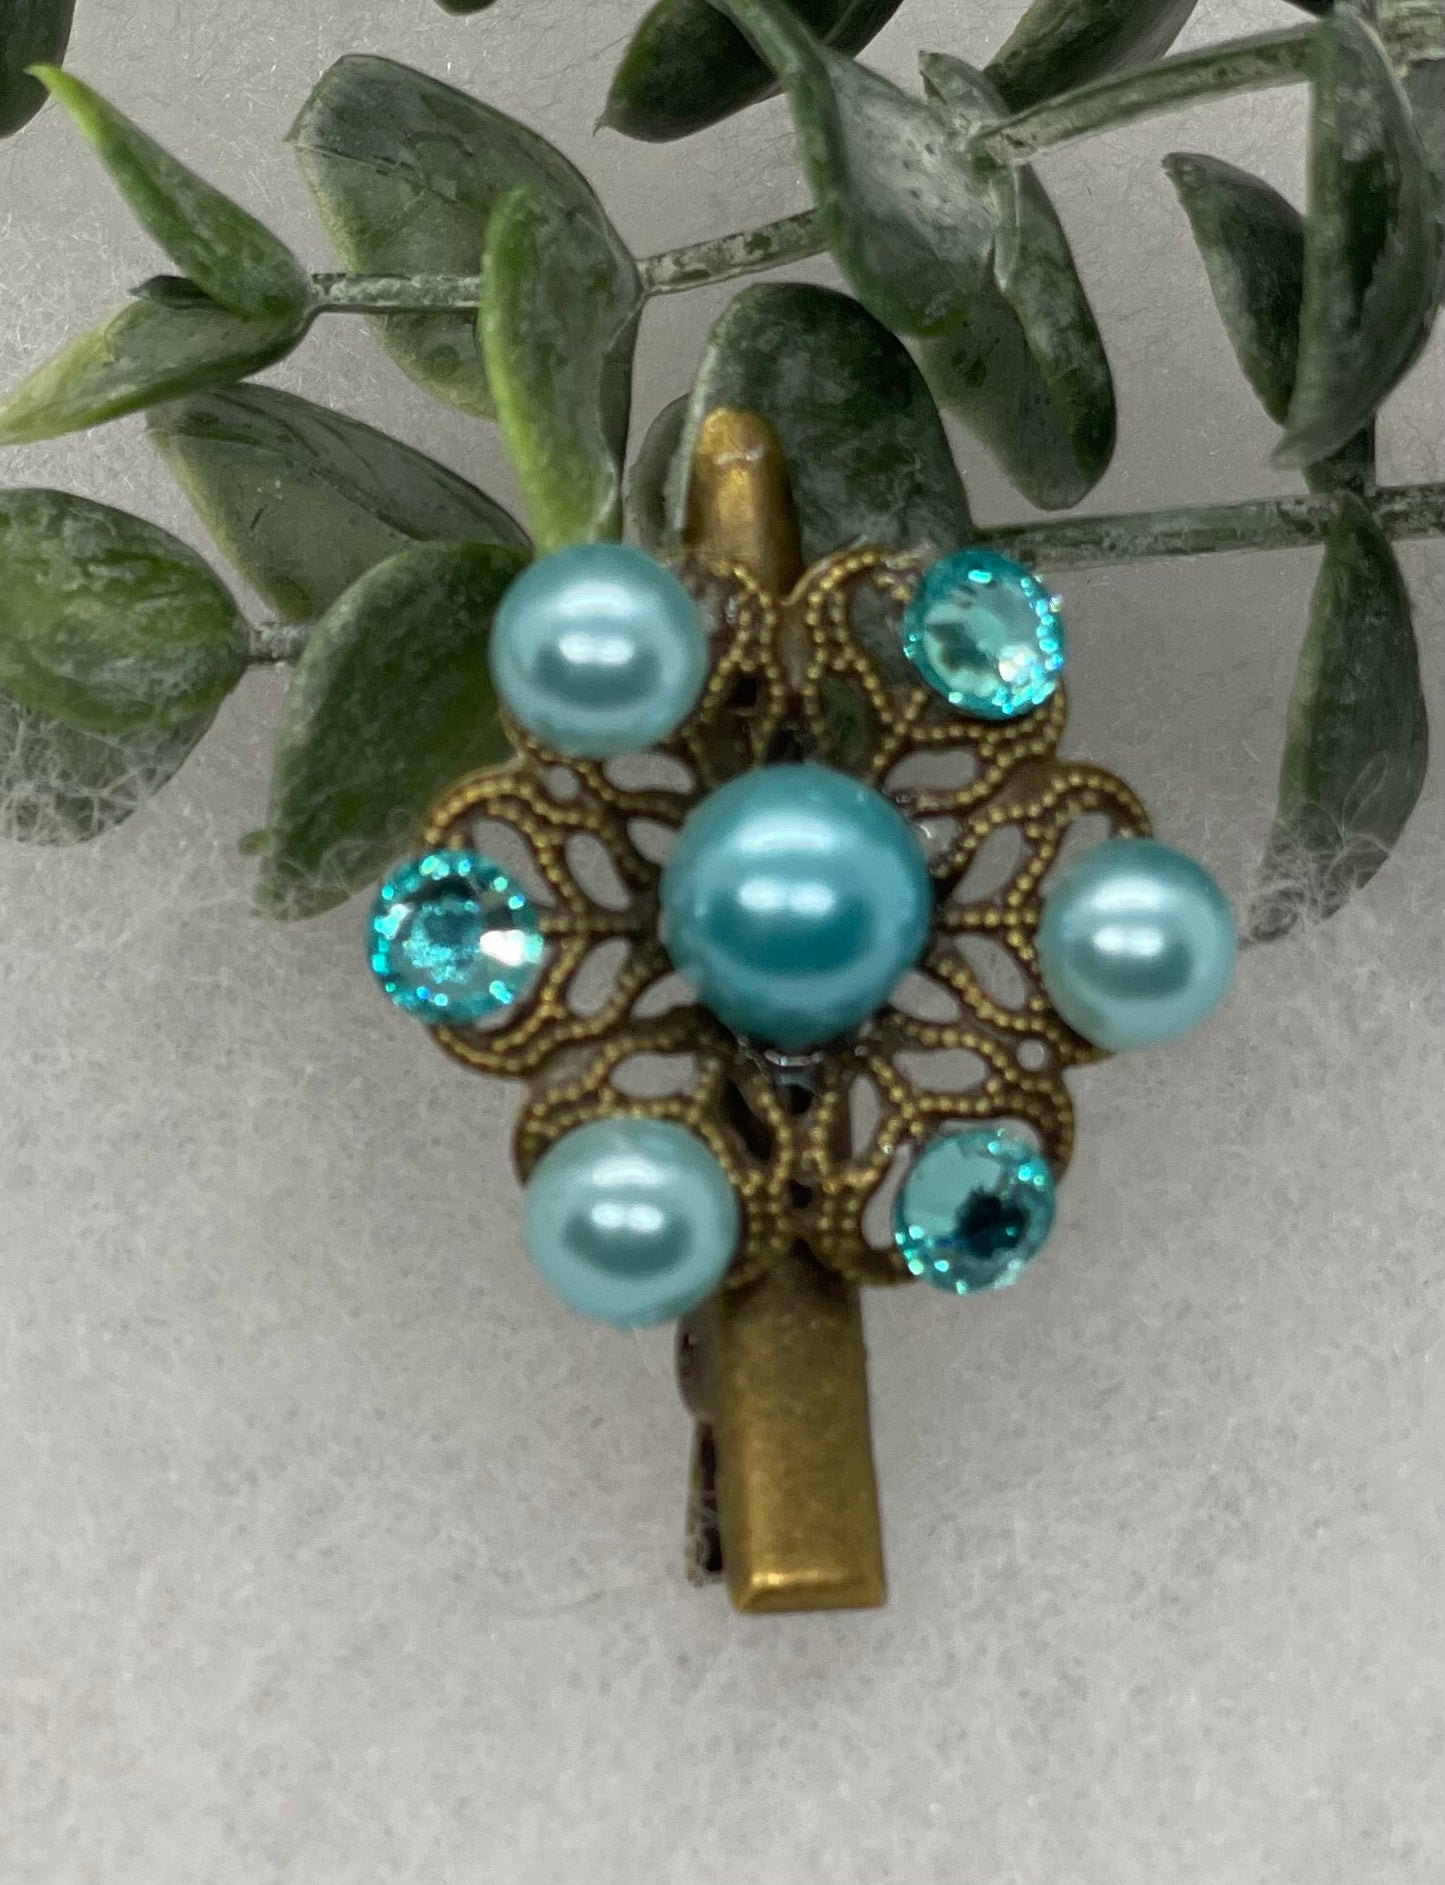 Blue teal Crystal faux pearl vintage antique style flower hair alligator clip 2.0” Handmade hair accessory bridal wedding